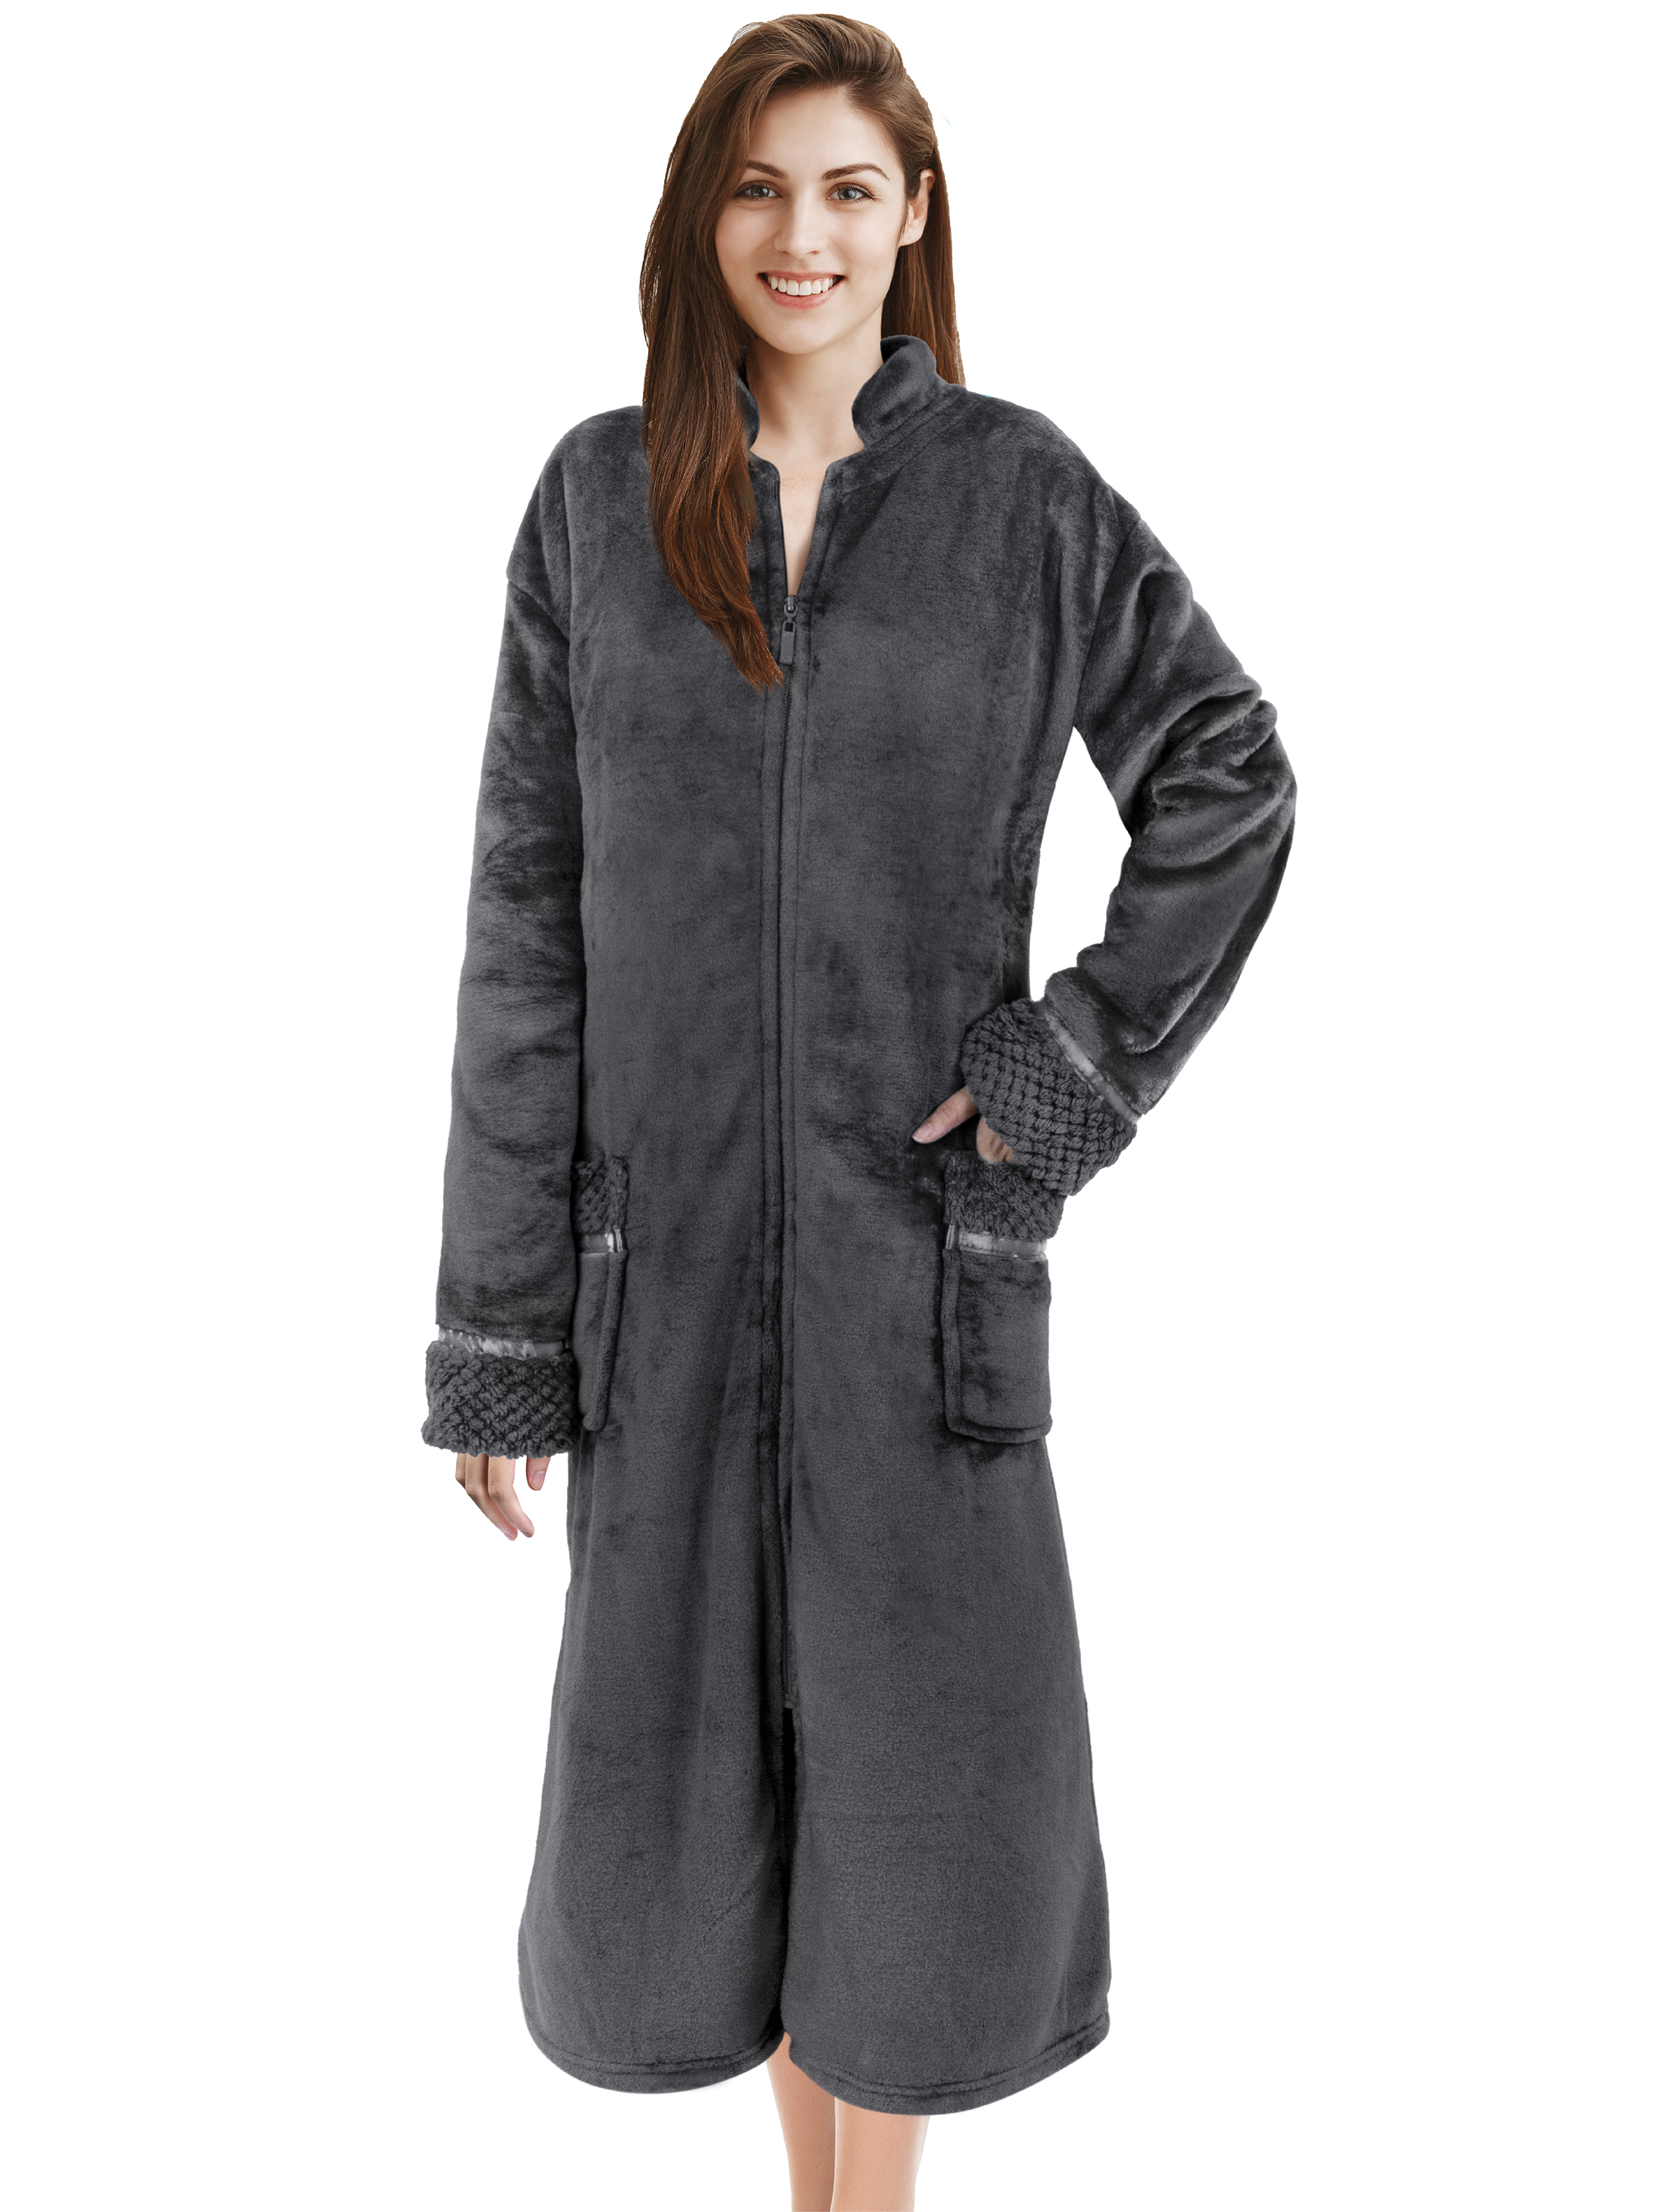 | eBay Length Satin Robe Zip Full Zipper Ladies Robe Lounger Trim Up Housecoat Women